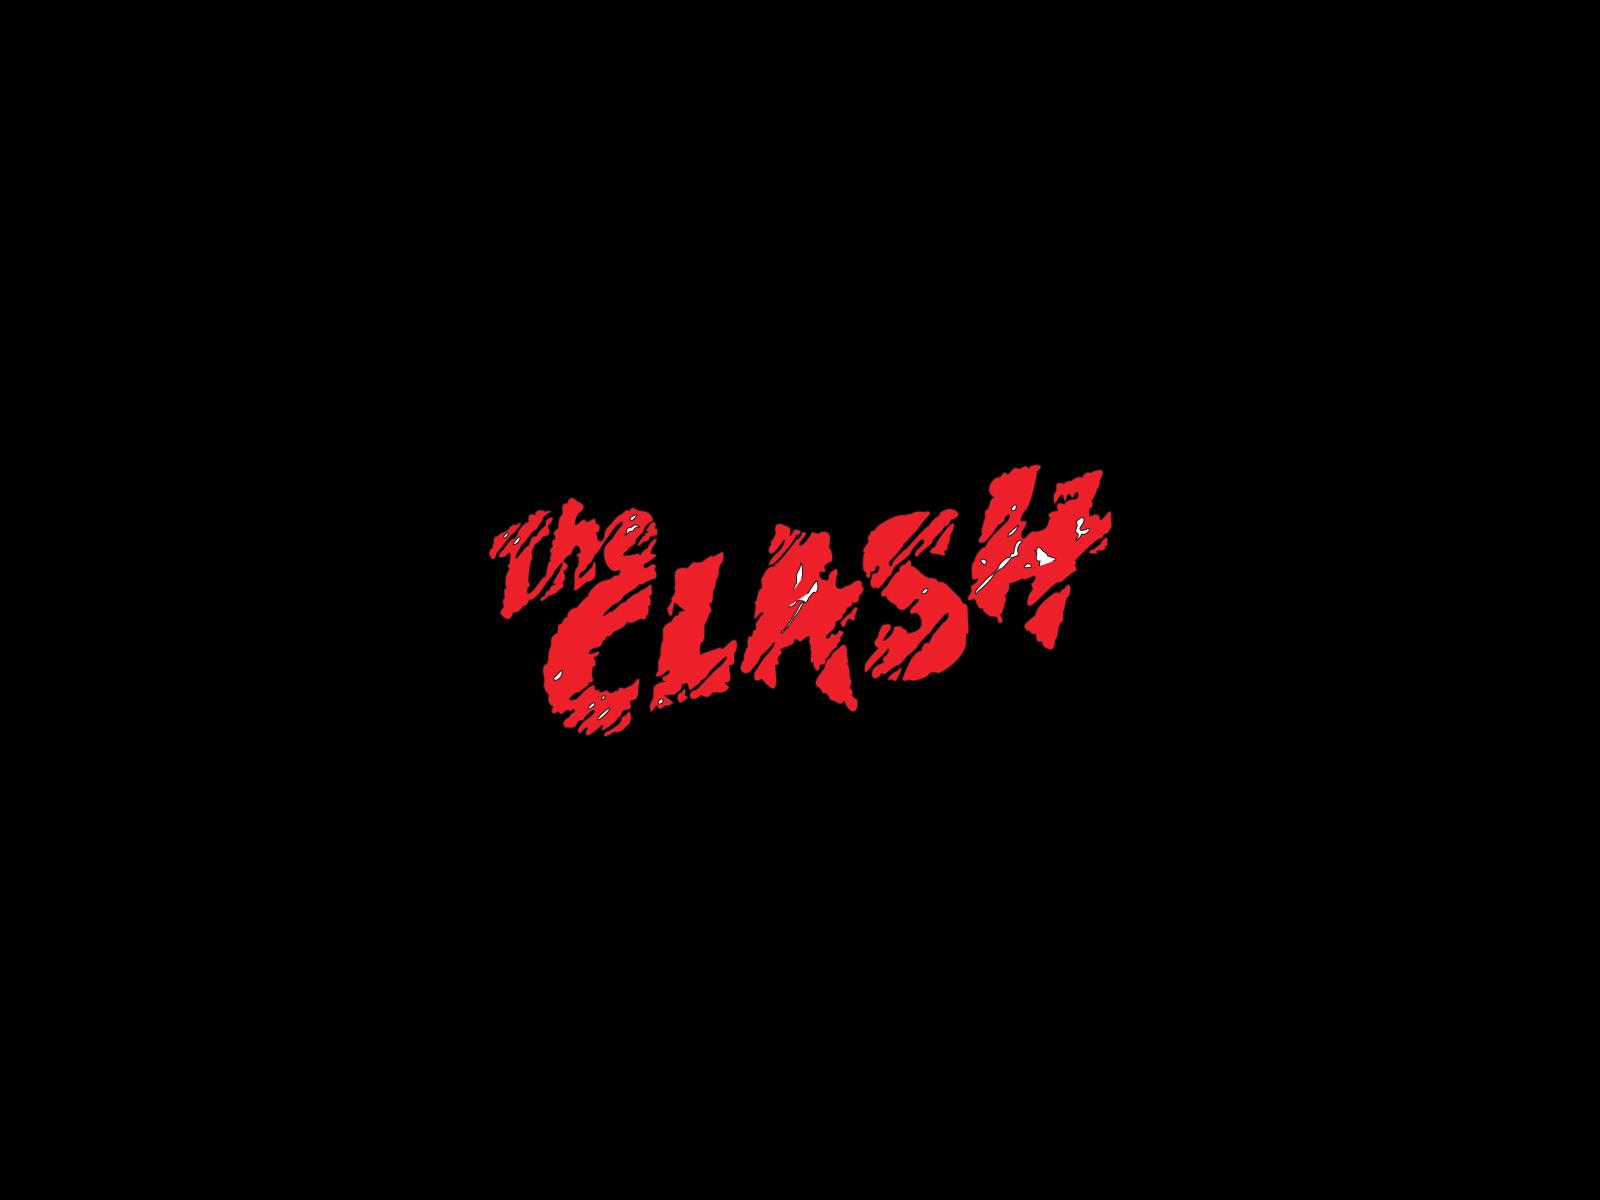 The Clash Wallpaper. Clash Royale